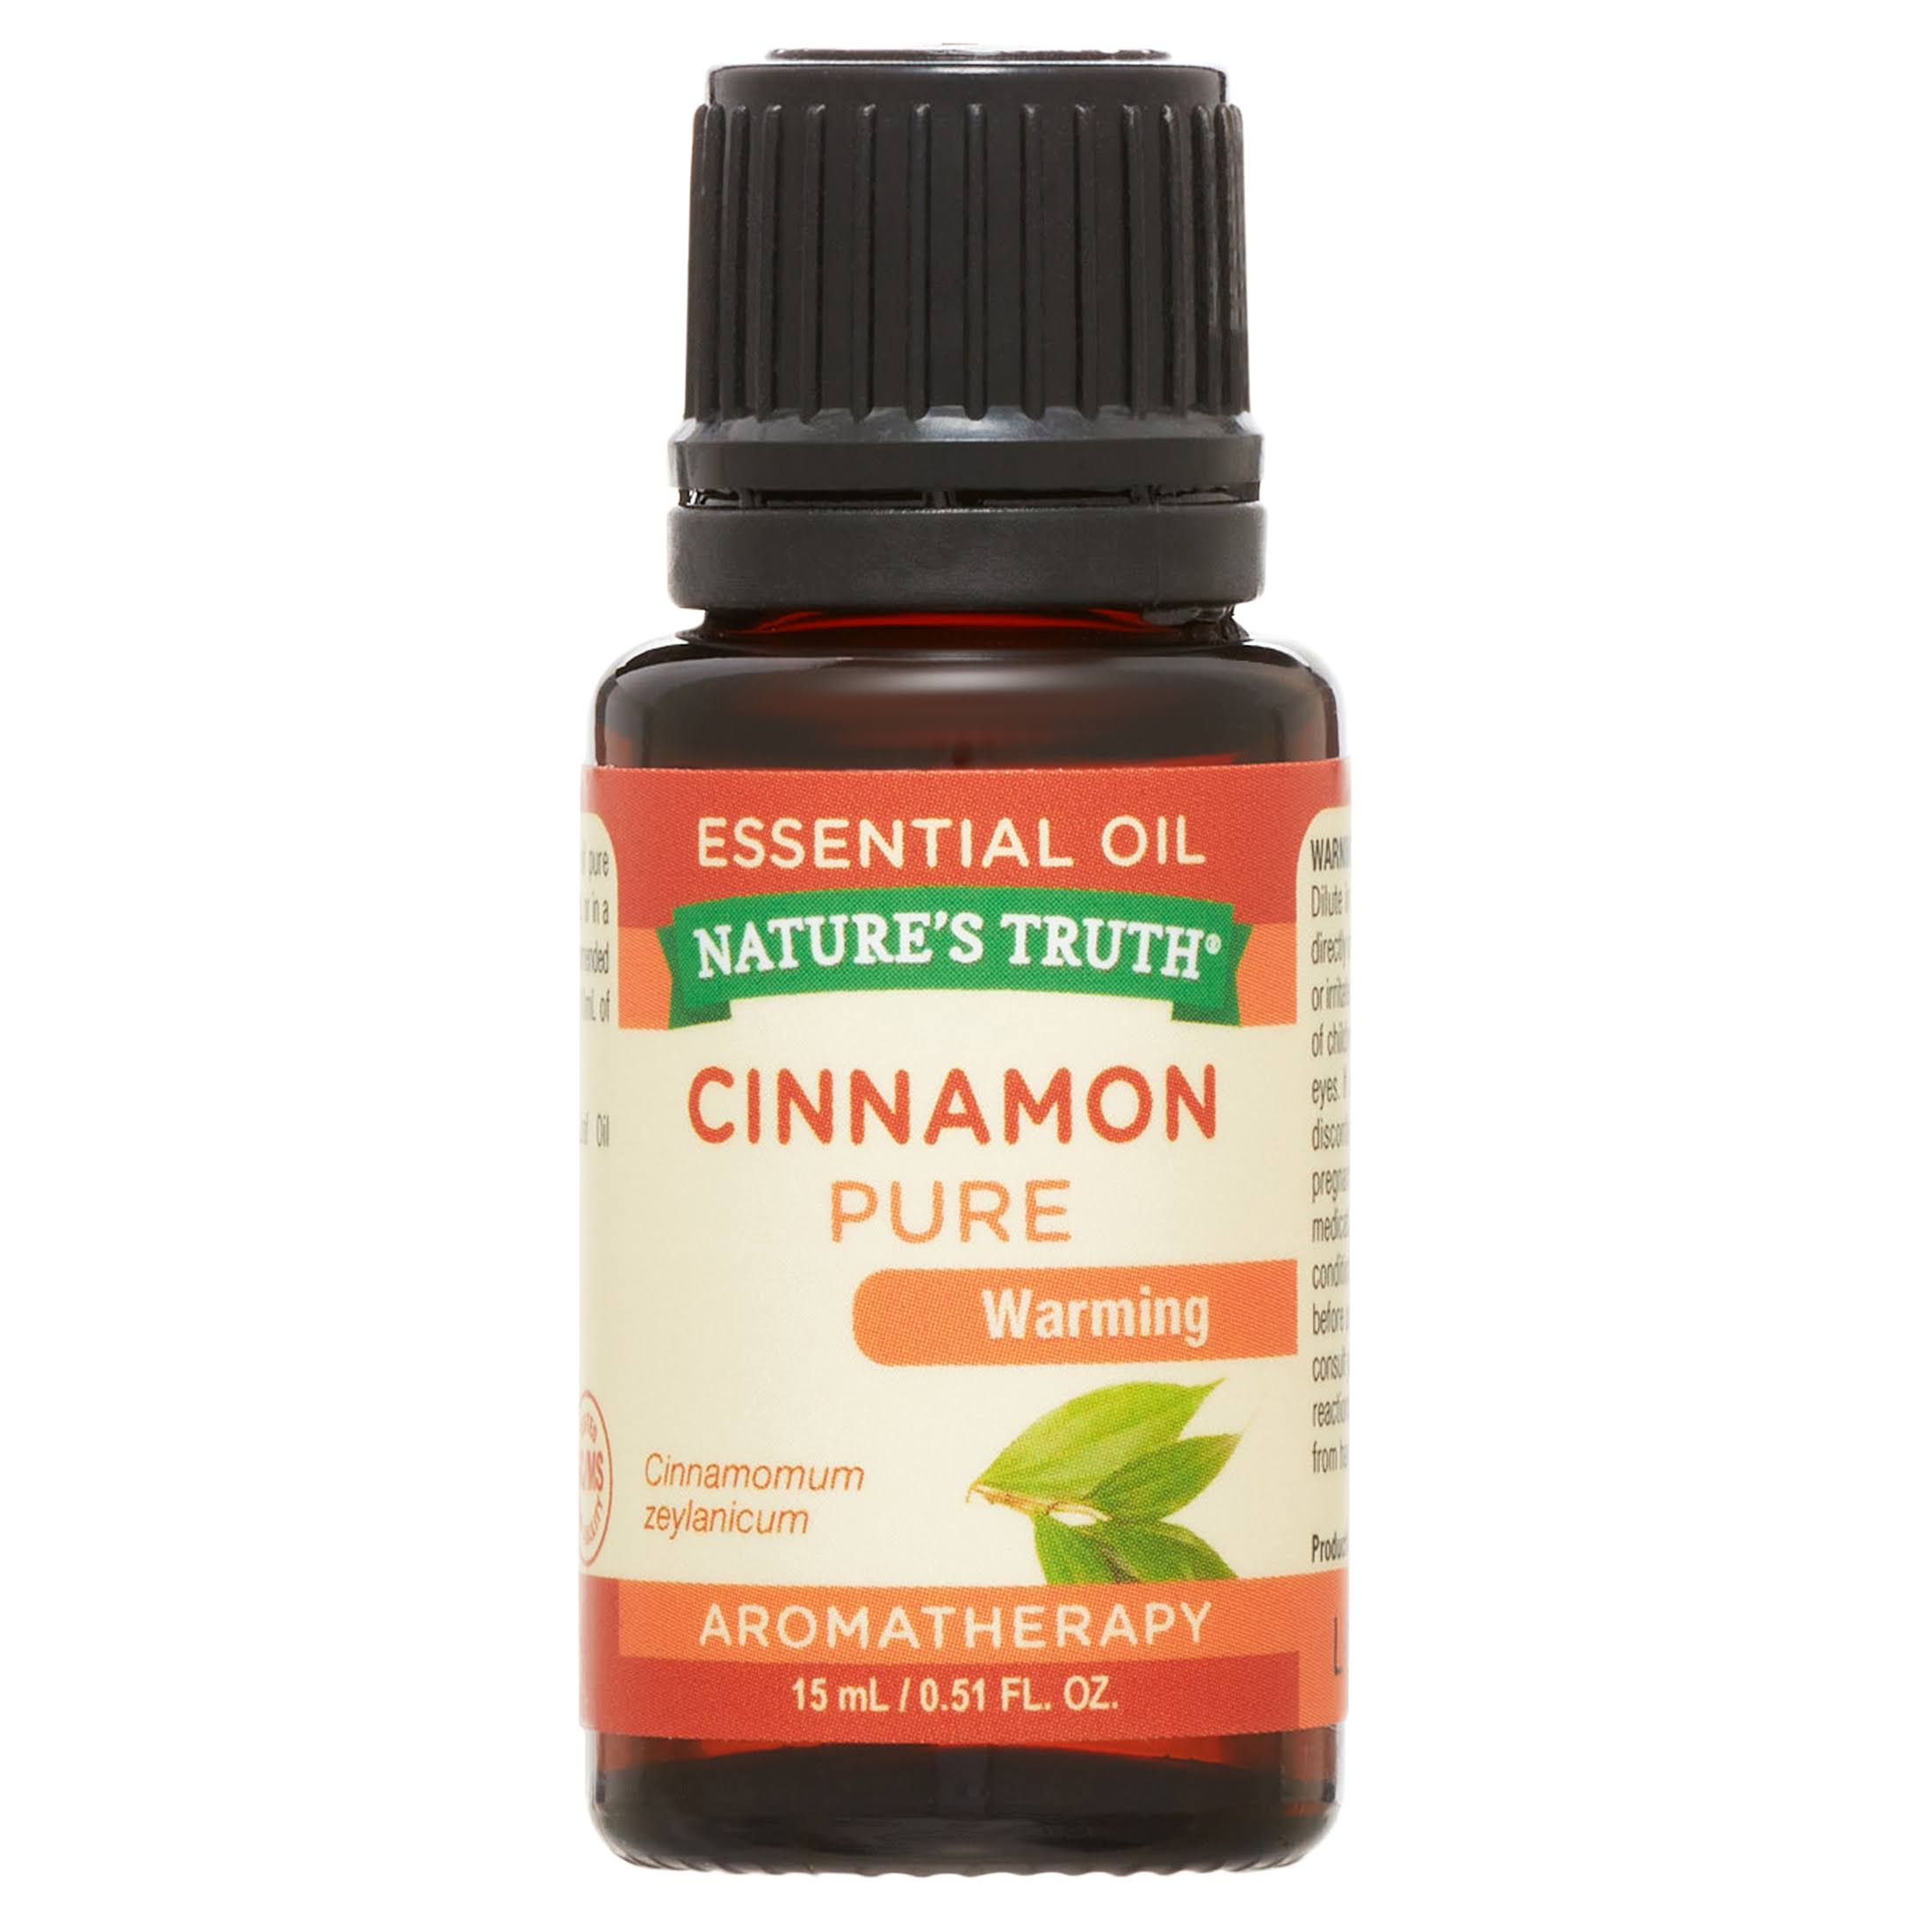 Nature's Truth Aromatherapy Essential Oil - Cinnamon, 15ml